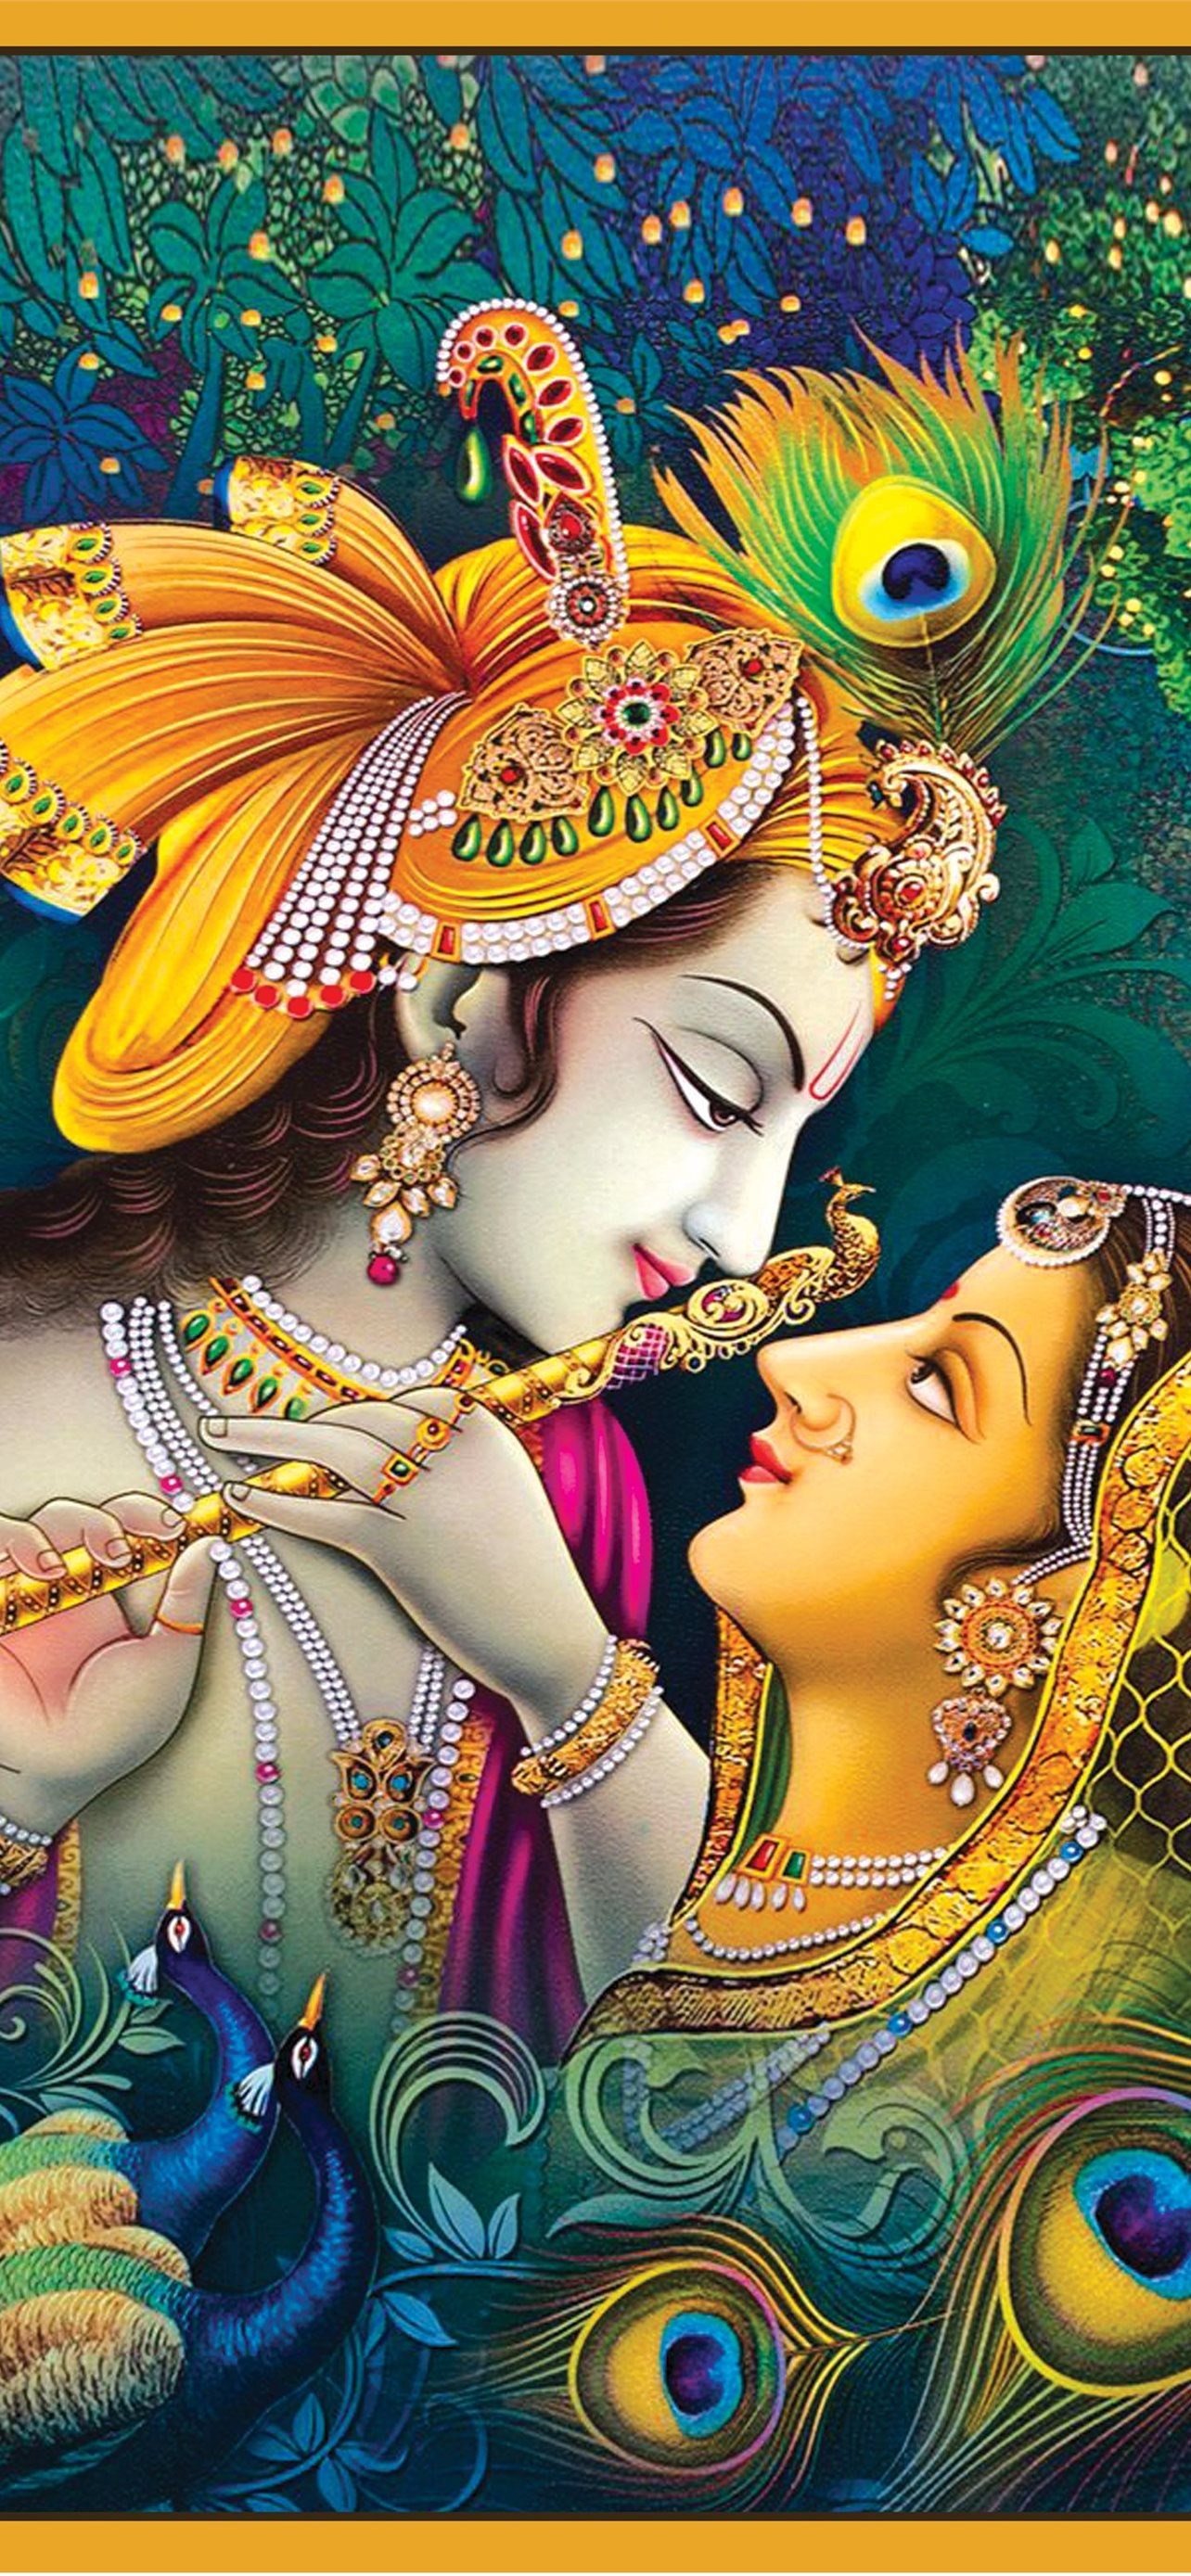 Lord Radha Krishna Painting top iPhone Wallpaper Free Download